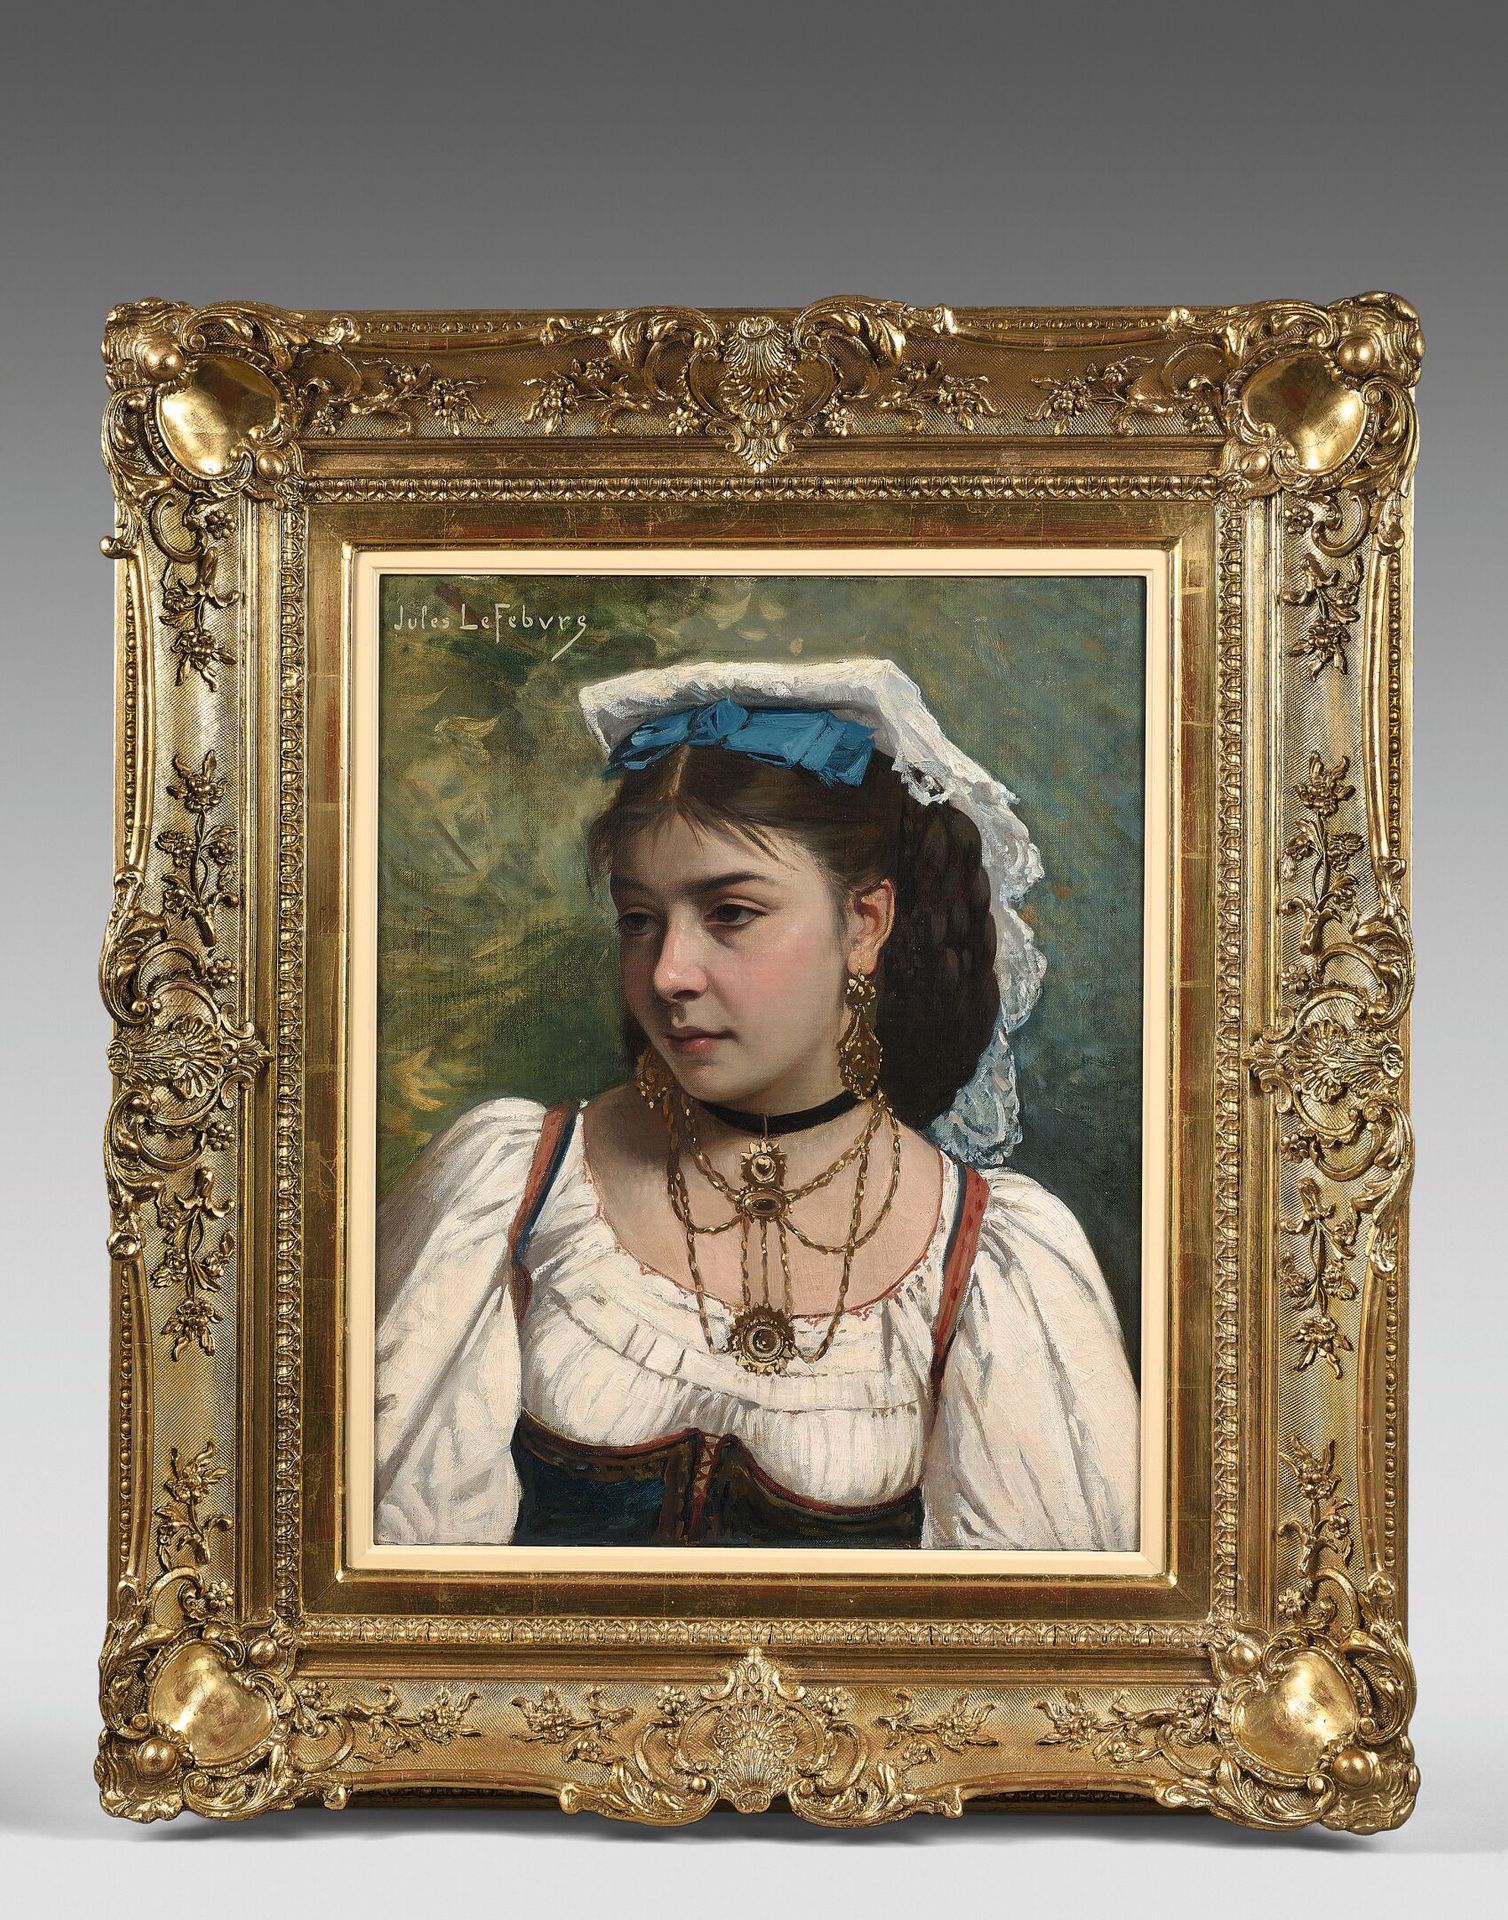 Null 儒勒-约瑟夫-勒费弗尔 
(1834-1912)
带着珠宝的年轻那不勒斯女人
布面油画，左上方有签名。
(修复)。
56 x 45厘米